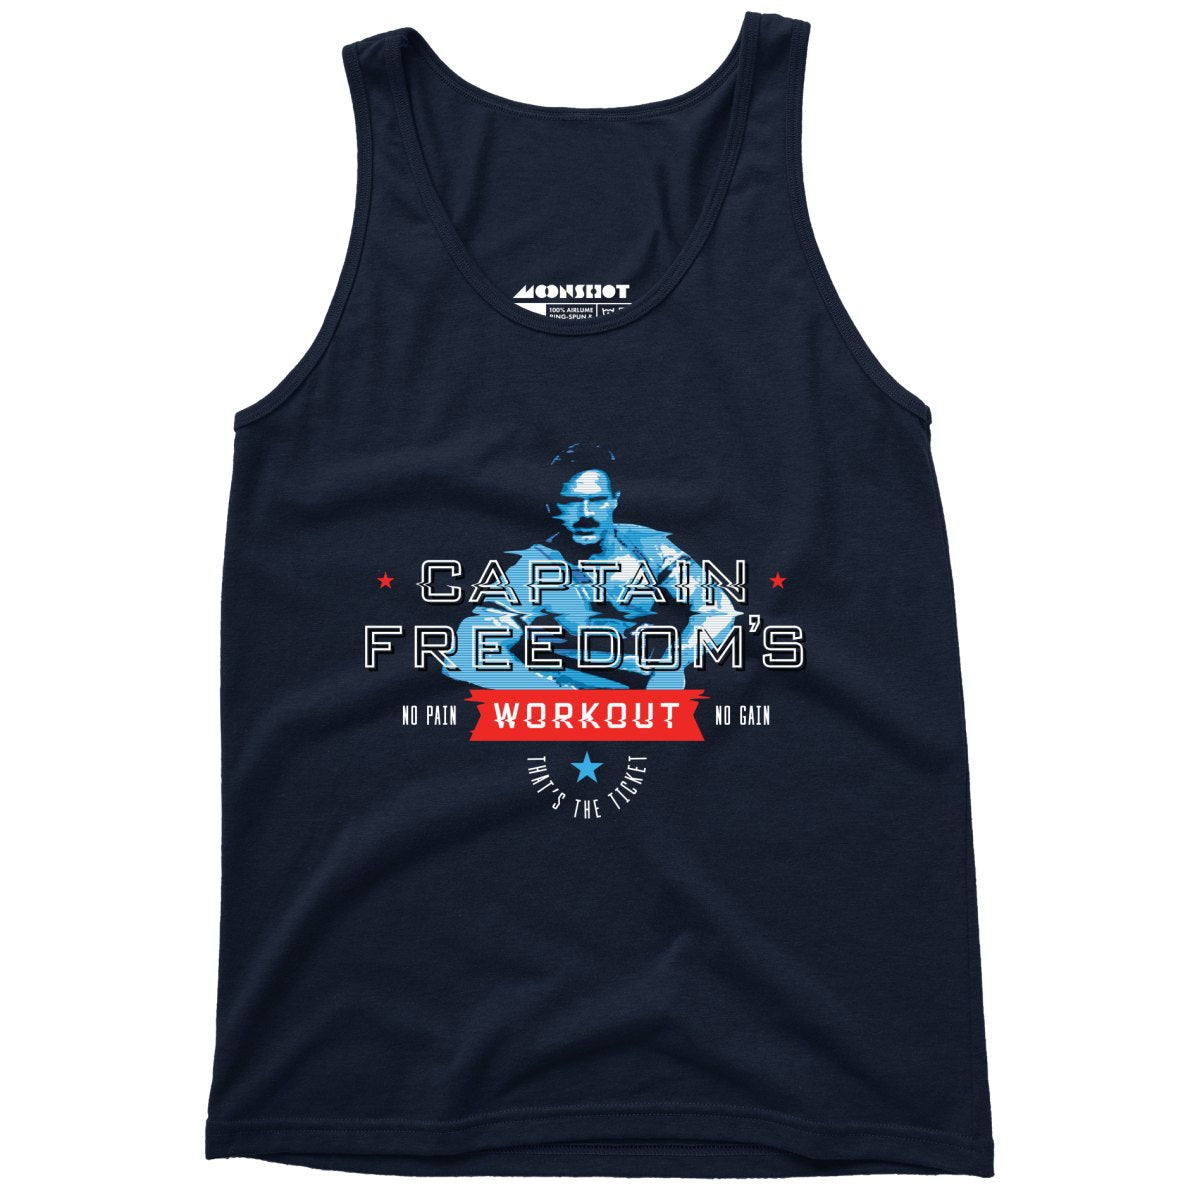 Running Man - Captain Freedom's Workout - Unisex Tank Top